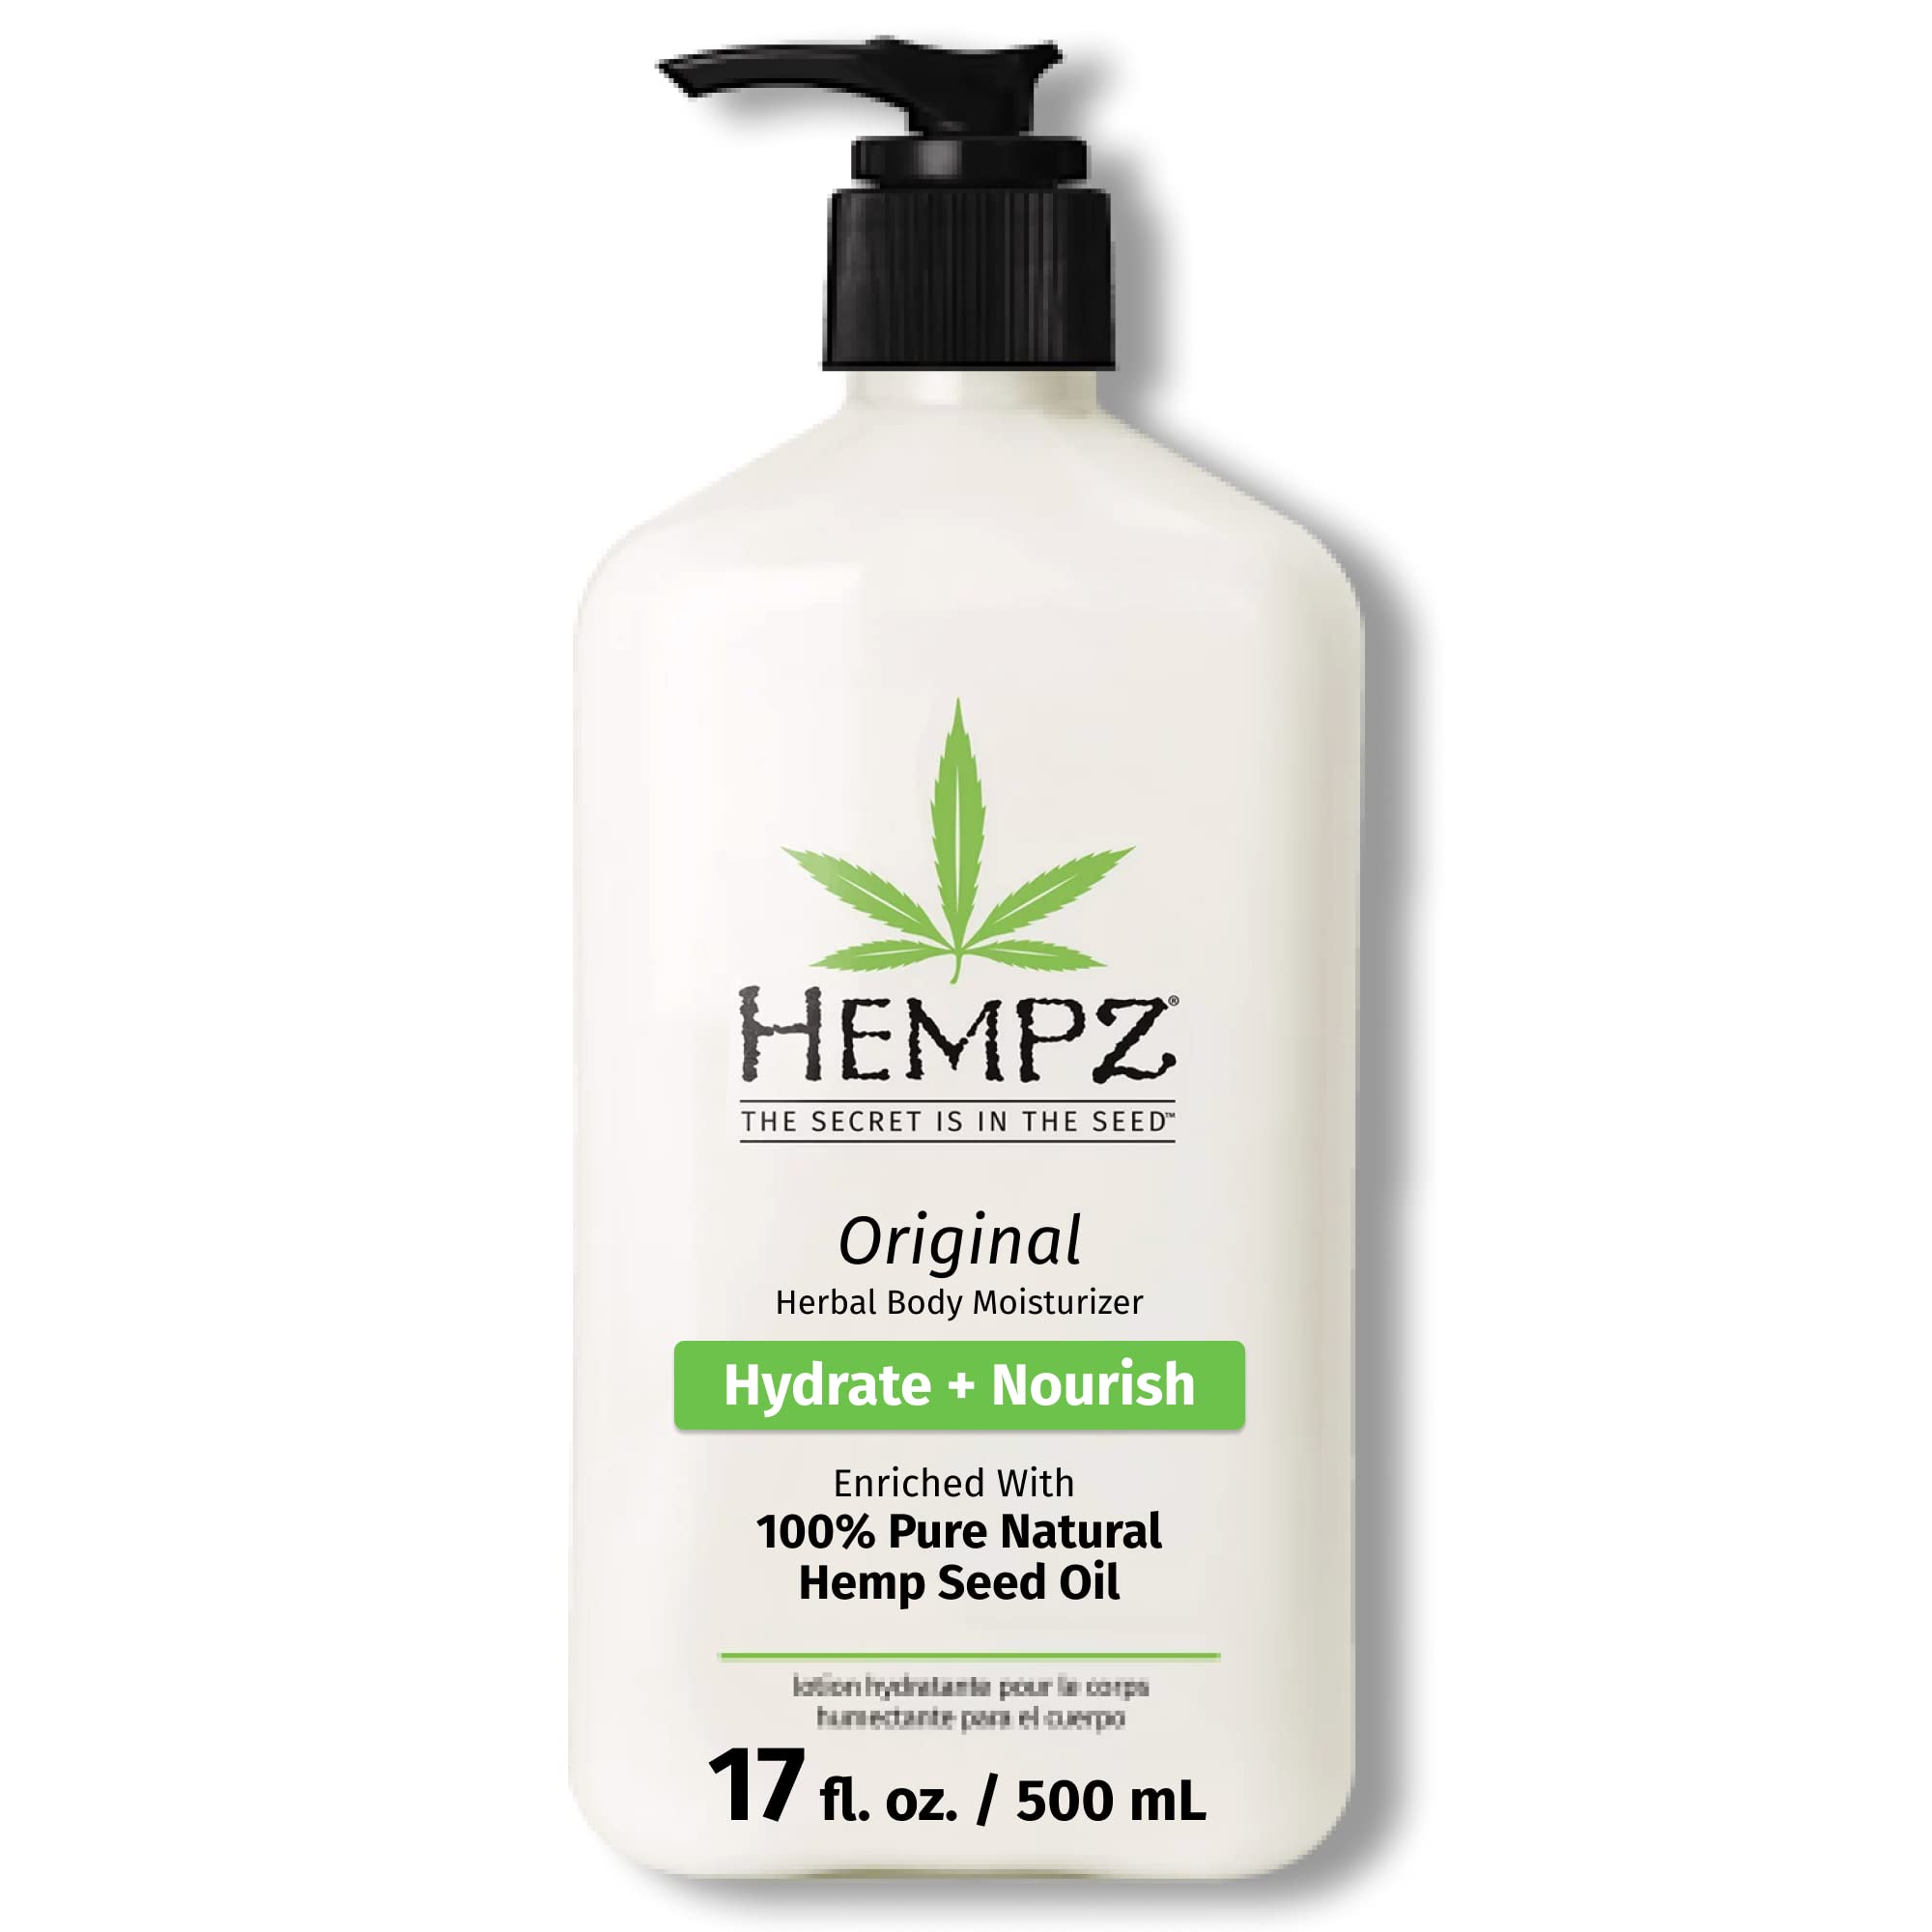 HEMPZ Body Lotion Original - Floral & Banana Daily Moisturizing Cream, Shea Butter Body Moisturizer - Skin Care Products, Hemp Seed Oil - Large